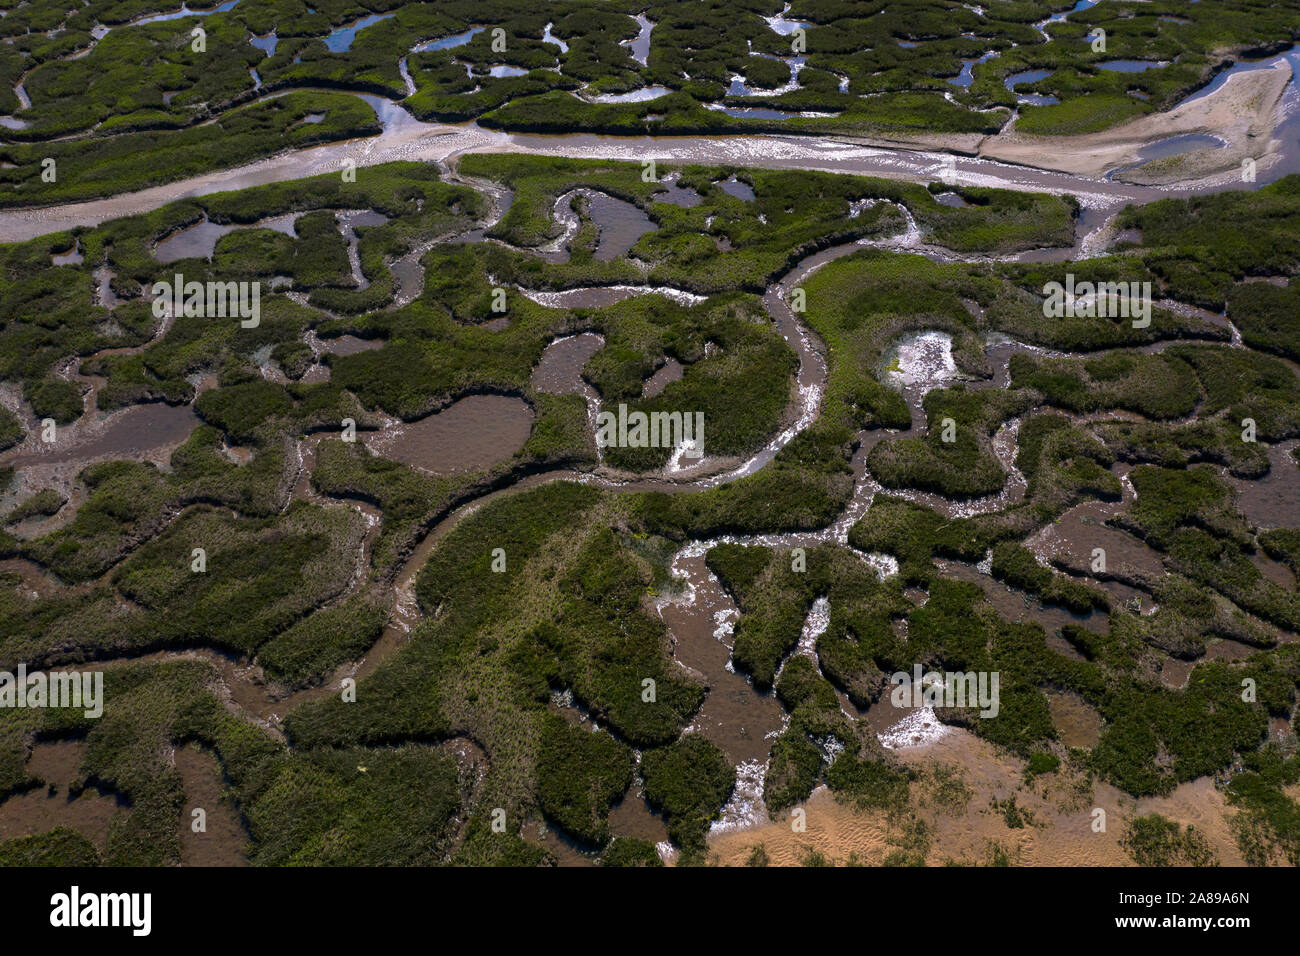 high level aerial view of salt marshes along east coast near stiffly,Norfolk,england Stock Photo